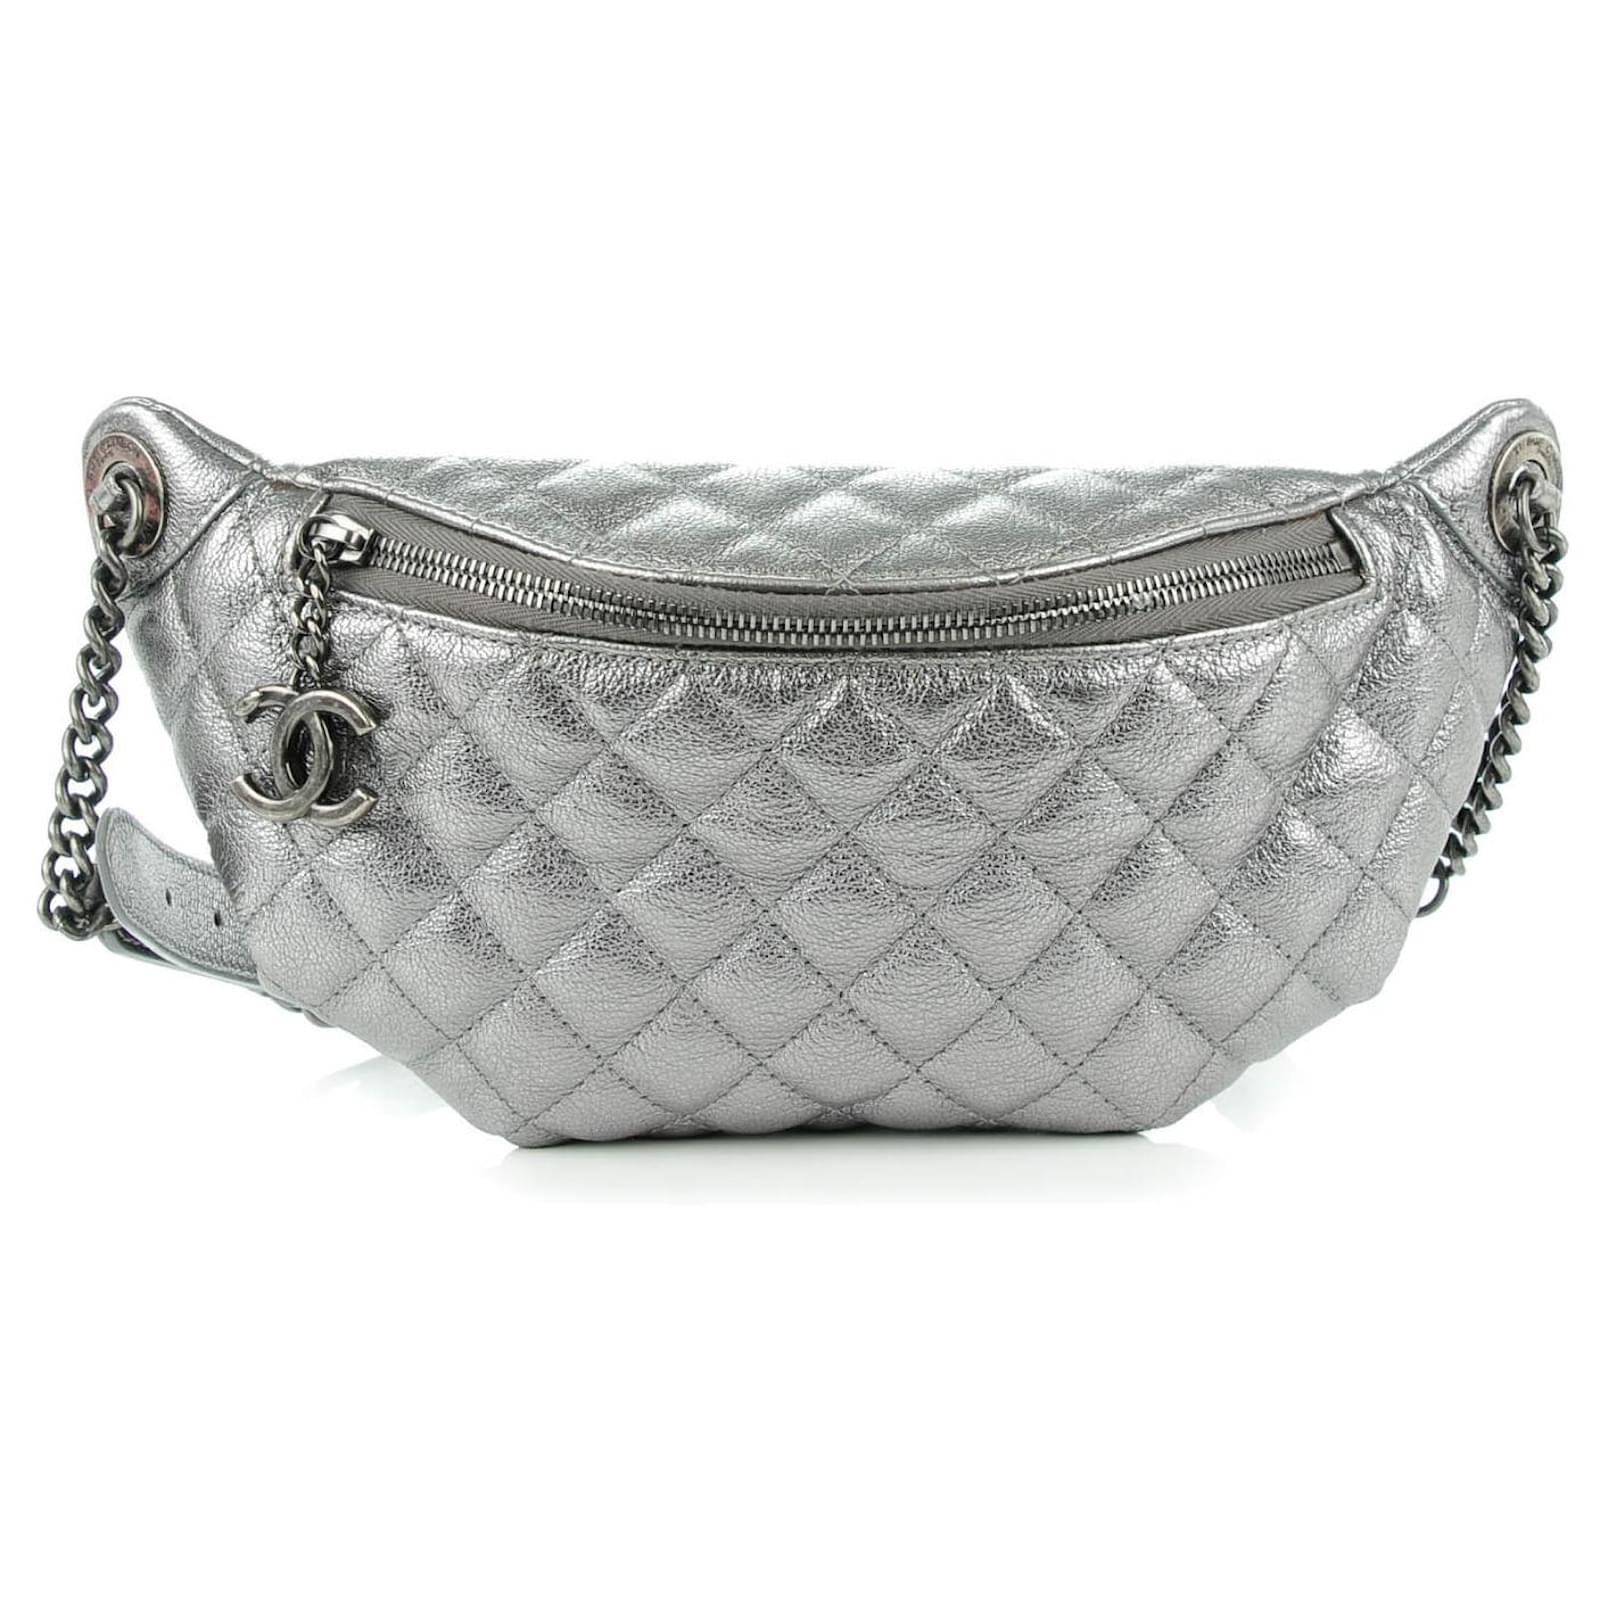 Chanel Metallic Grey Leather Fanny Pack Waist Bag